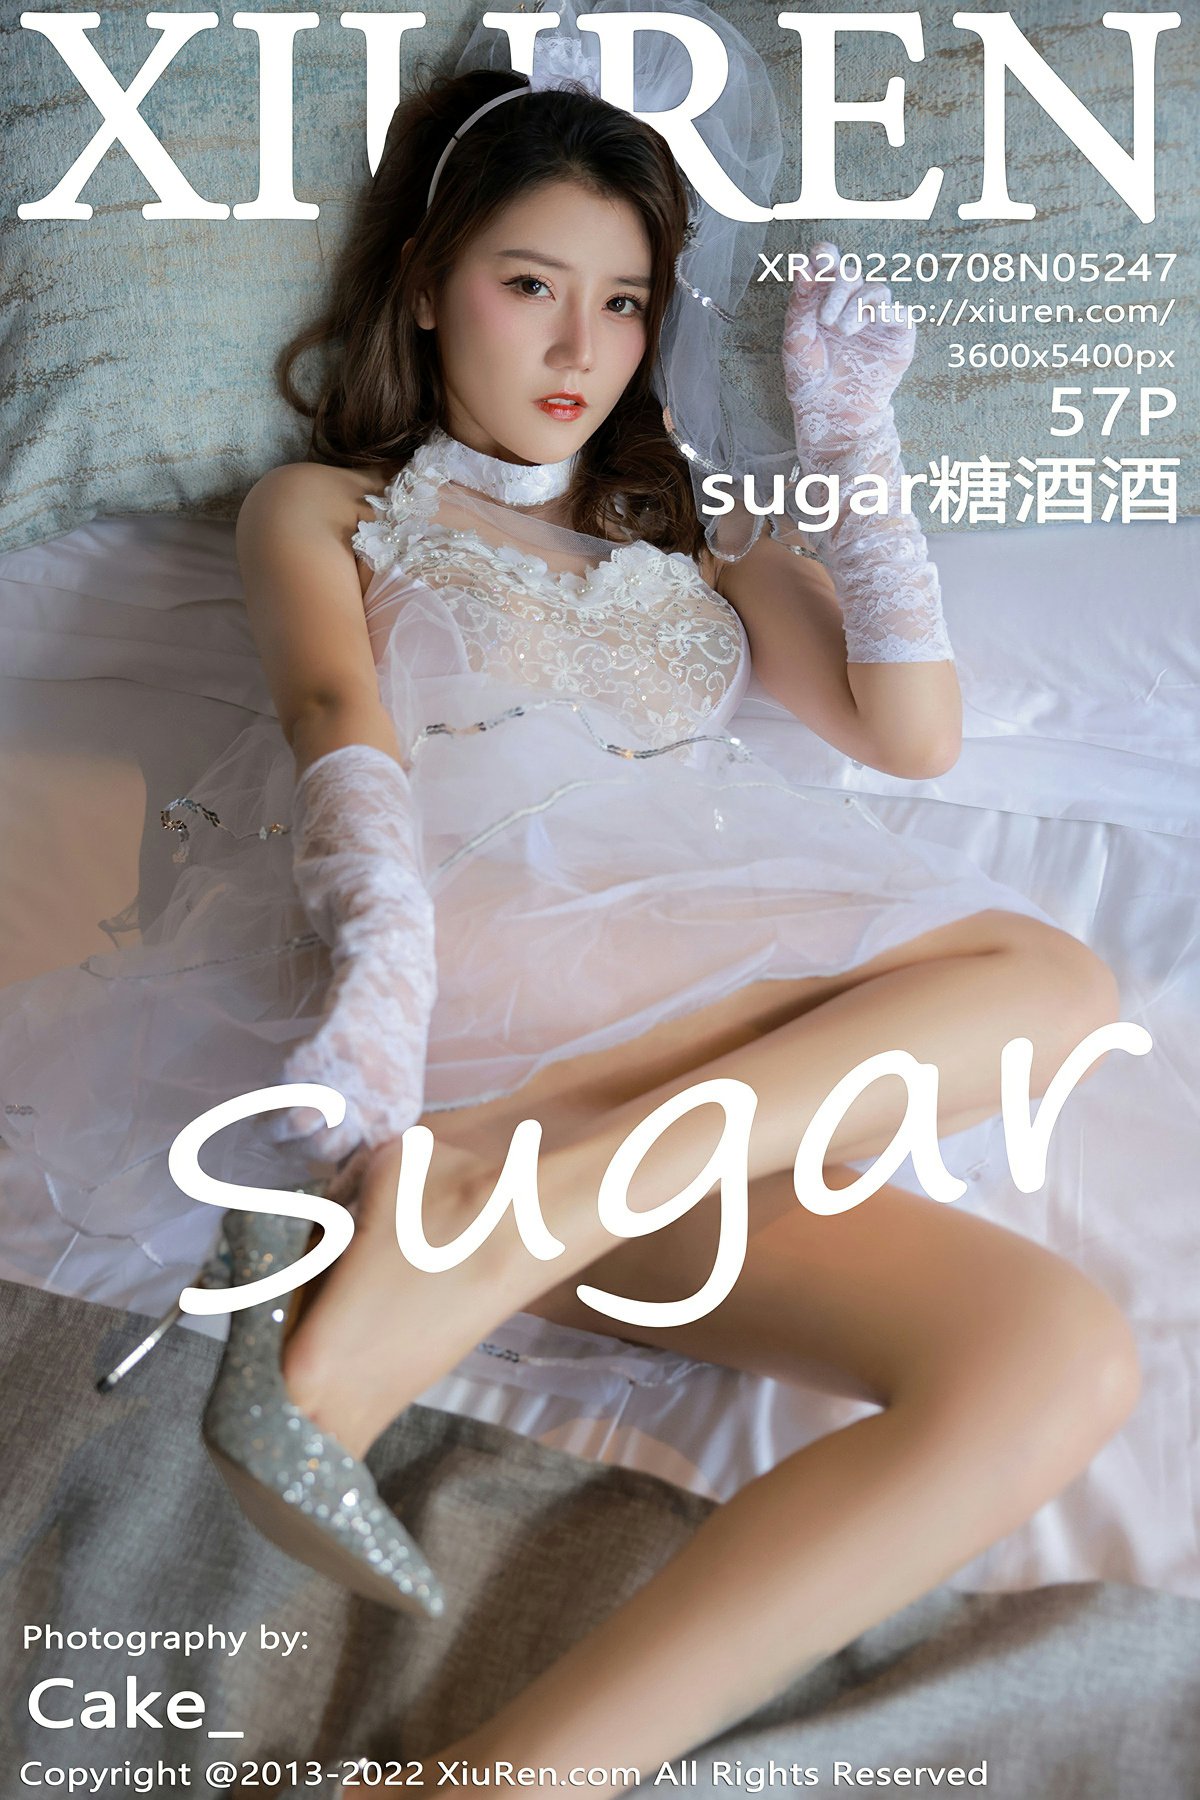 [XiuRen秀人网] 2022.07.08 No.5247 sugar糖酒酒 [57+1P]